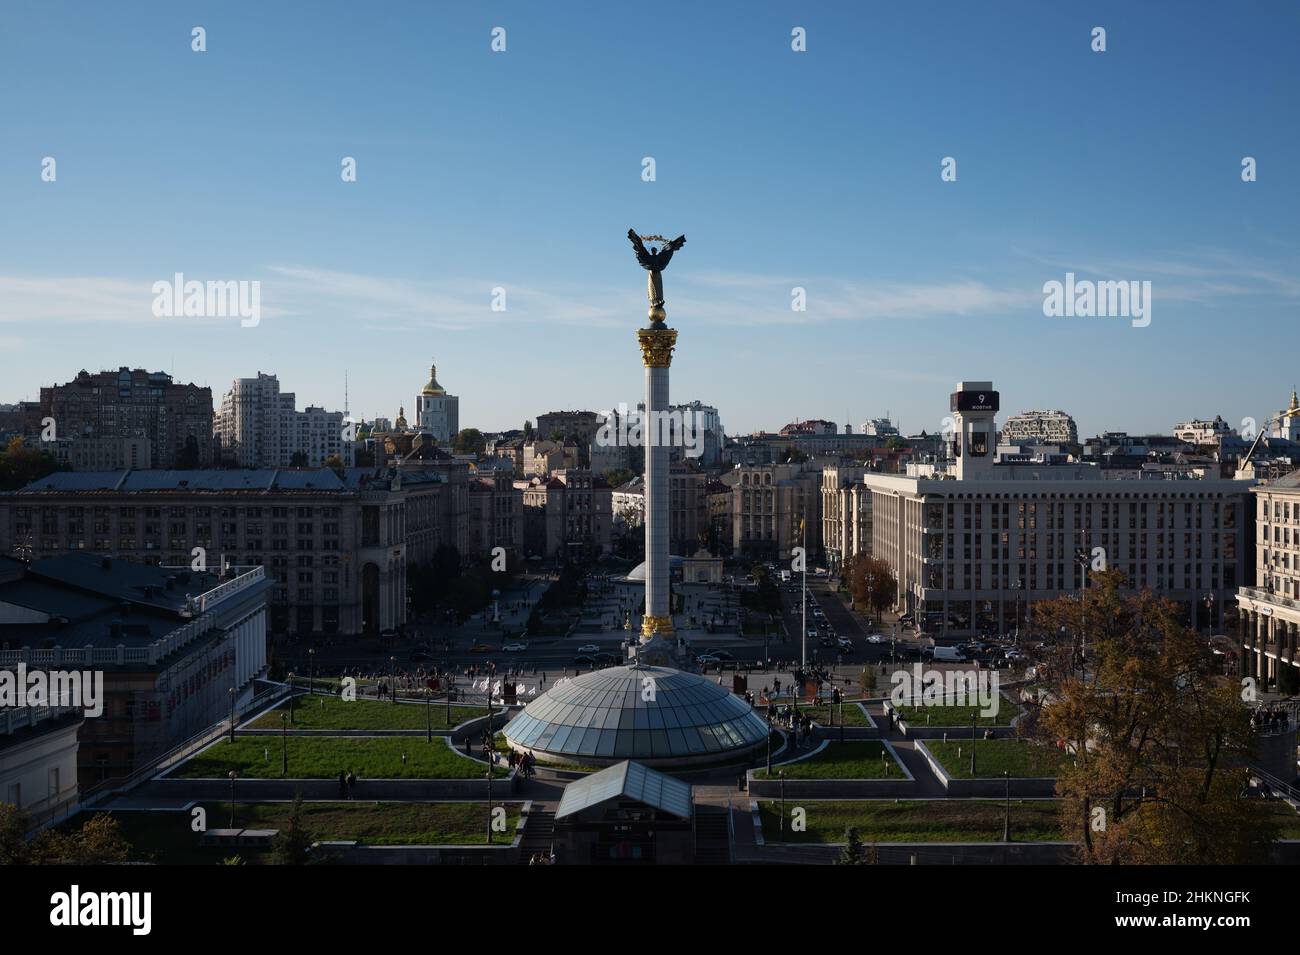 The Independence Monument, metro station, hotel and mall are landmarks at Maidan Nezalezhnosti Square in Kyiv, Ukraine. Stock Photo